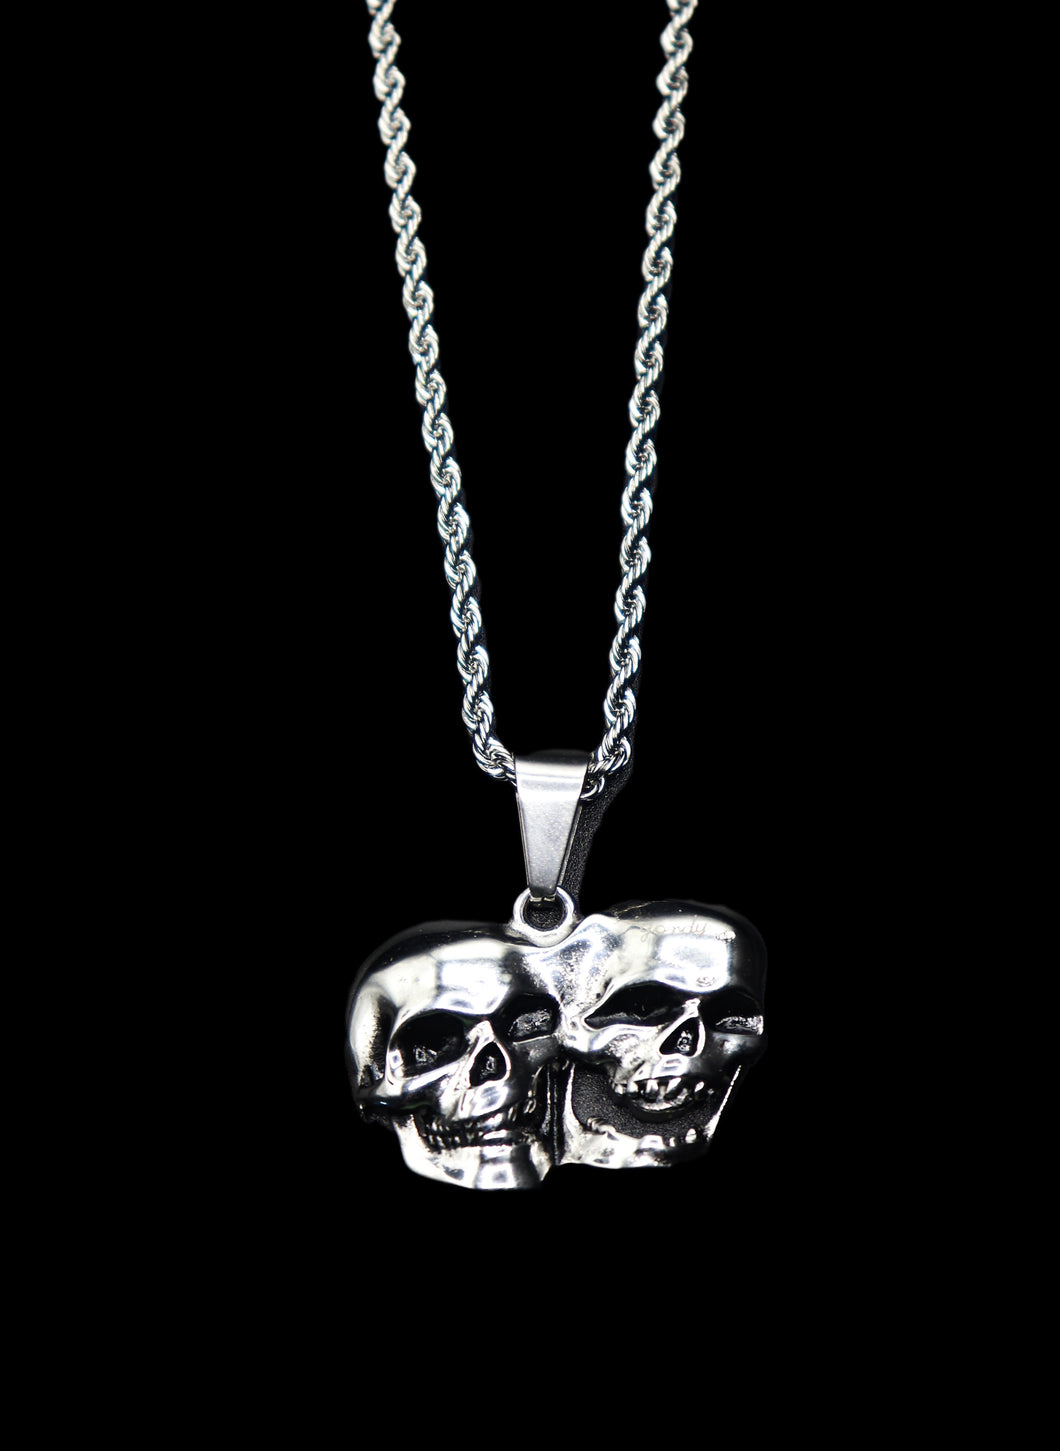 Skull’s Melt Necklace - Fashion Jewelry by Yordy.